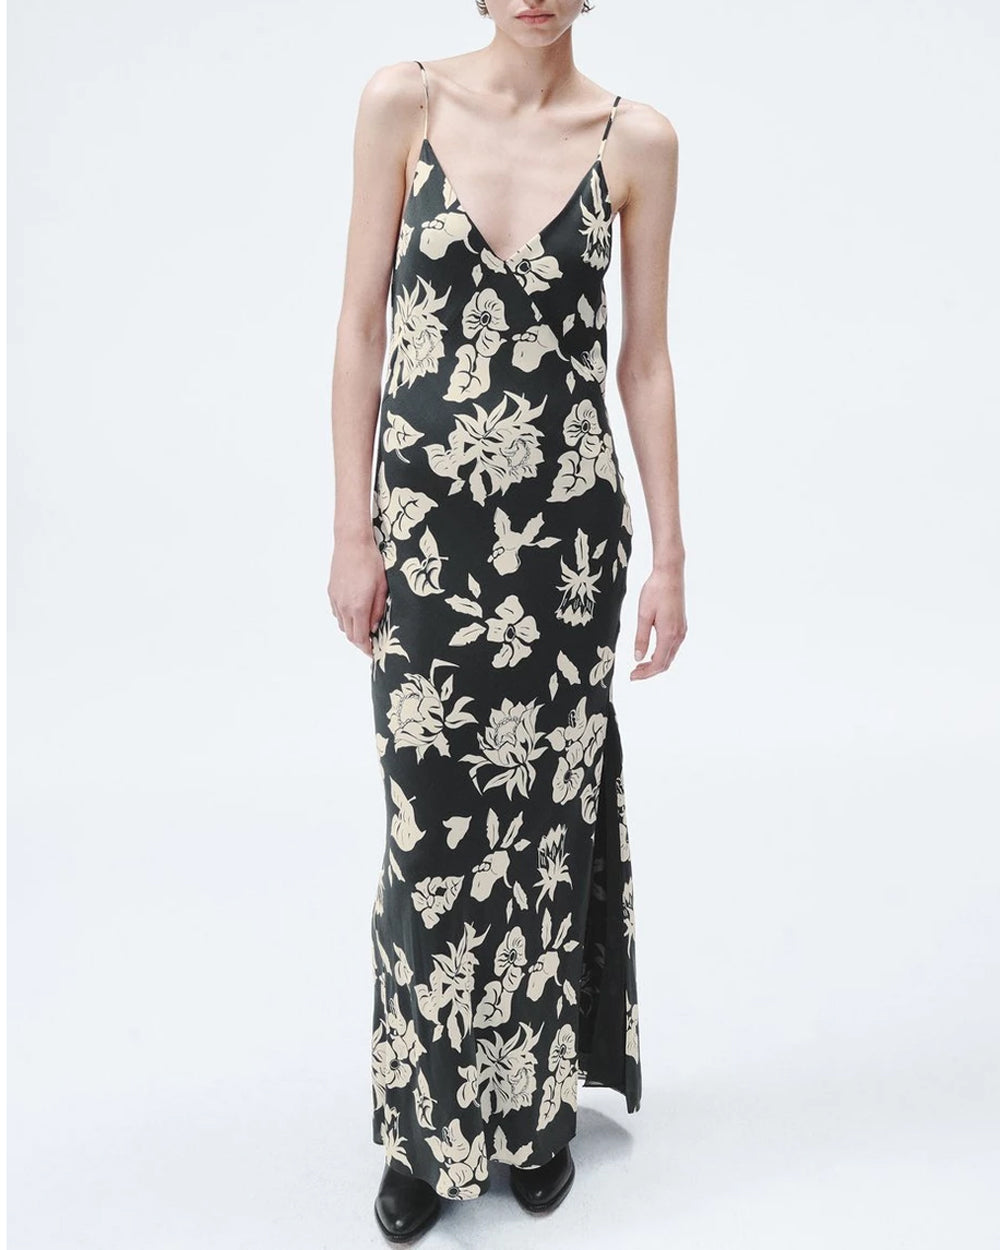 Black Floral Print Larissa Dress